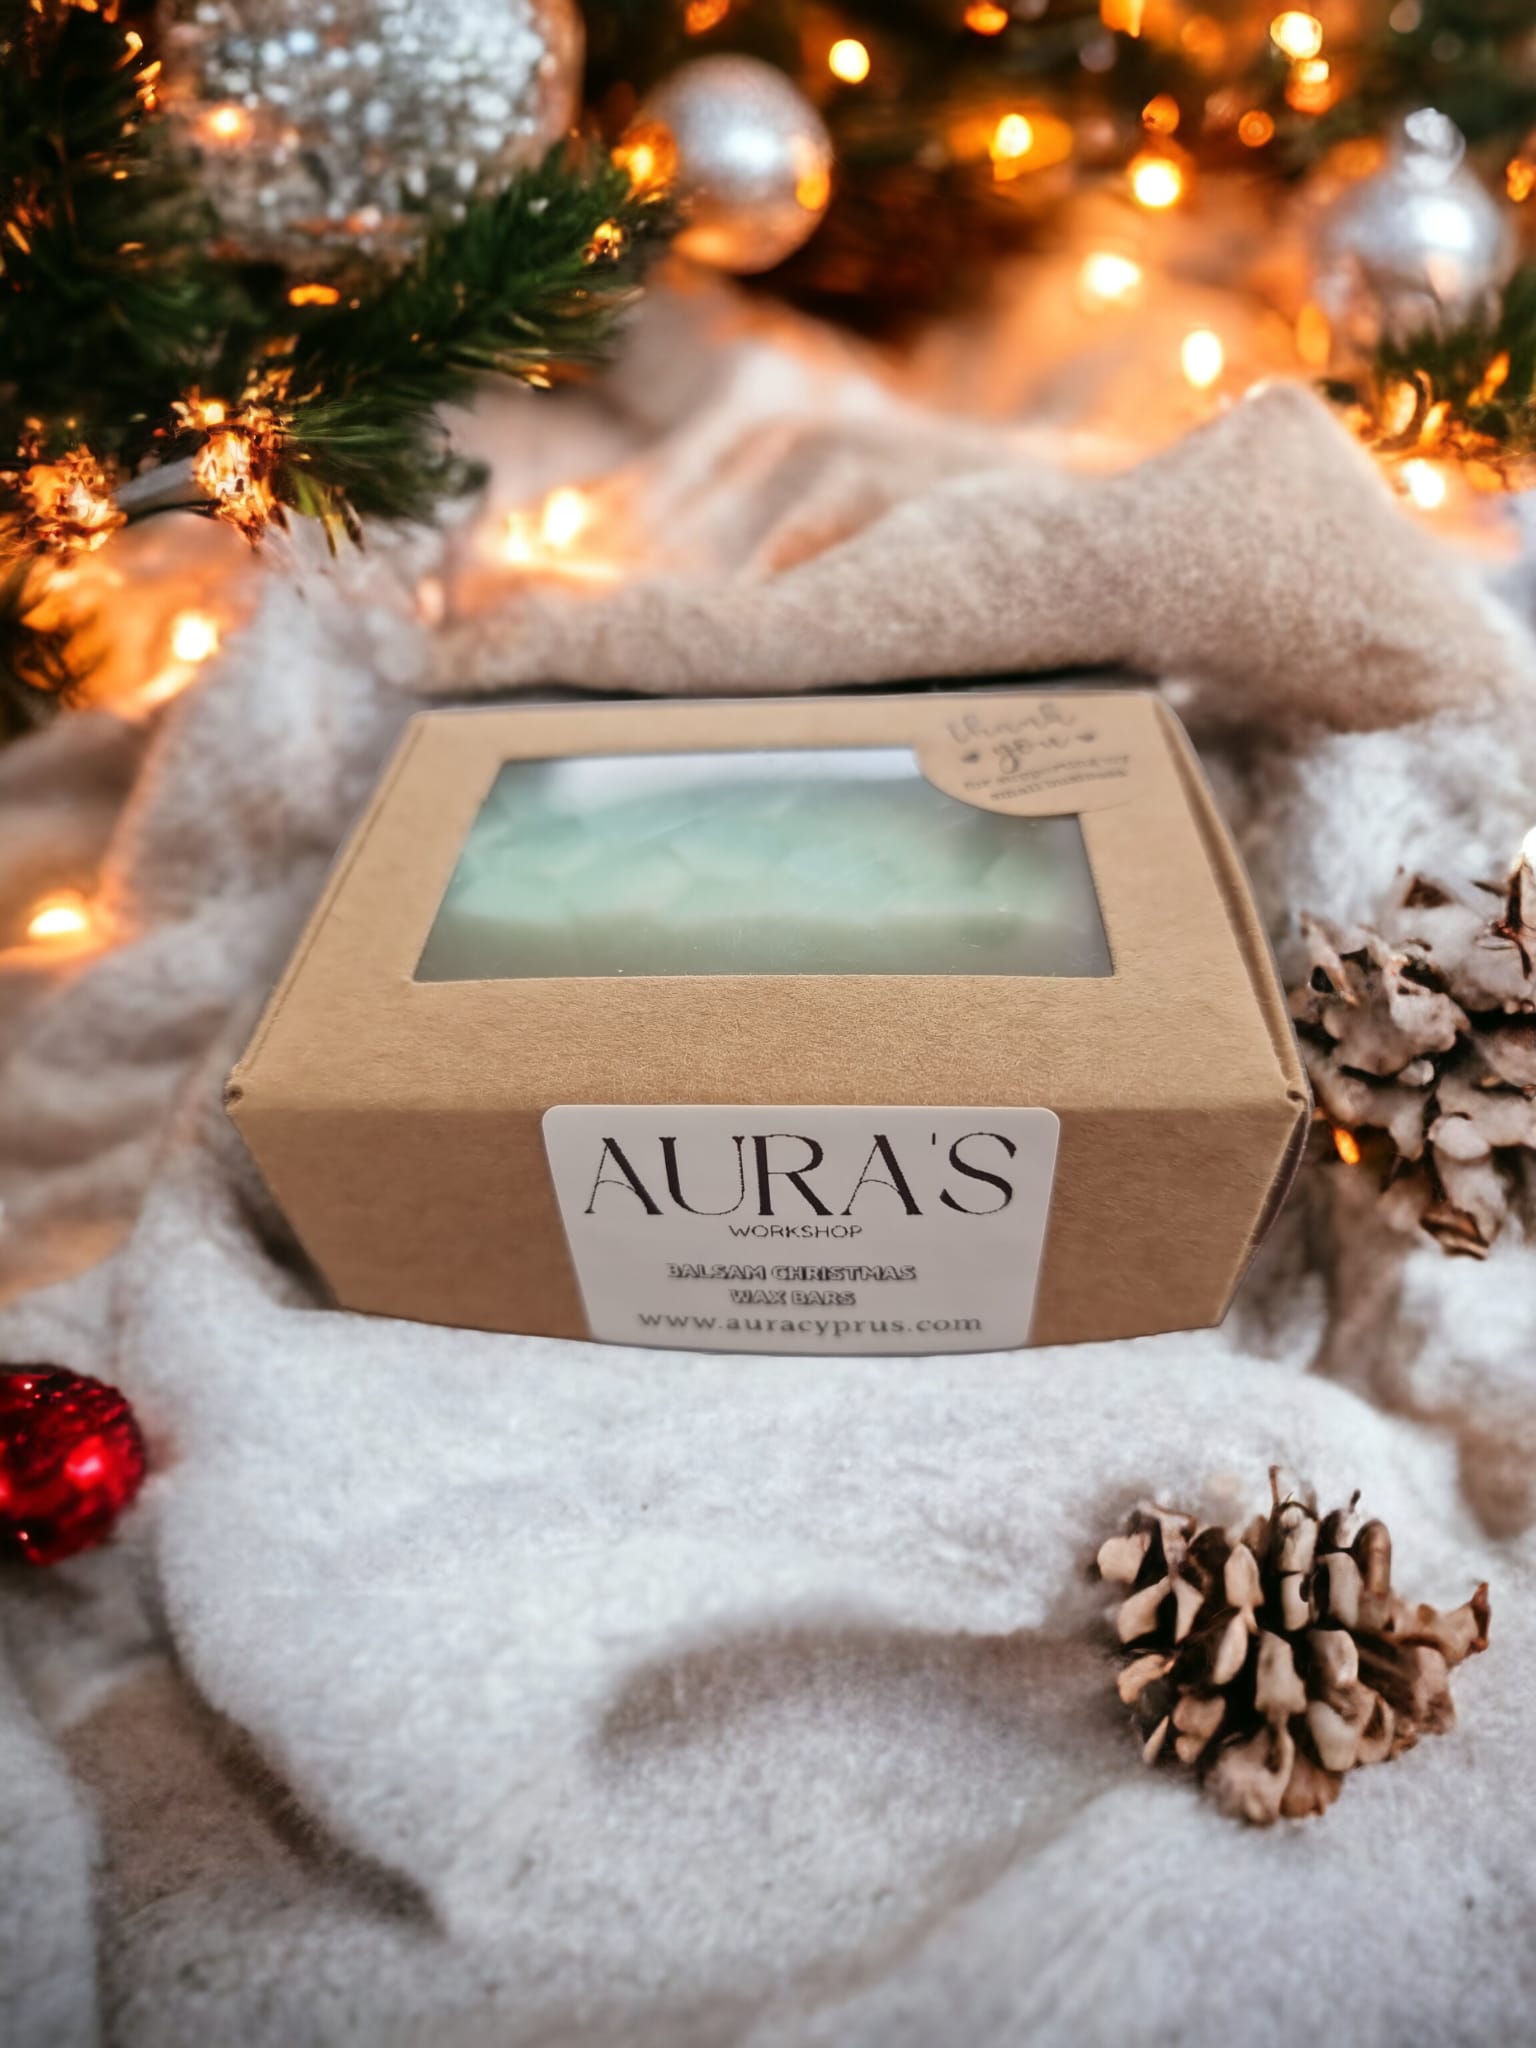 Balsam Christmas Wax Bars - Auras Workshop  -  Wax Melts -   - Cyprus & Greece - Wholesale - Retail #